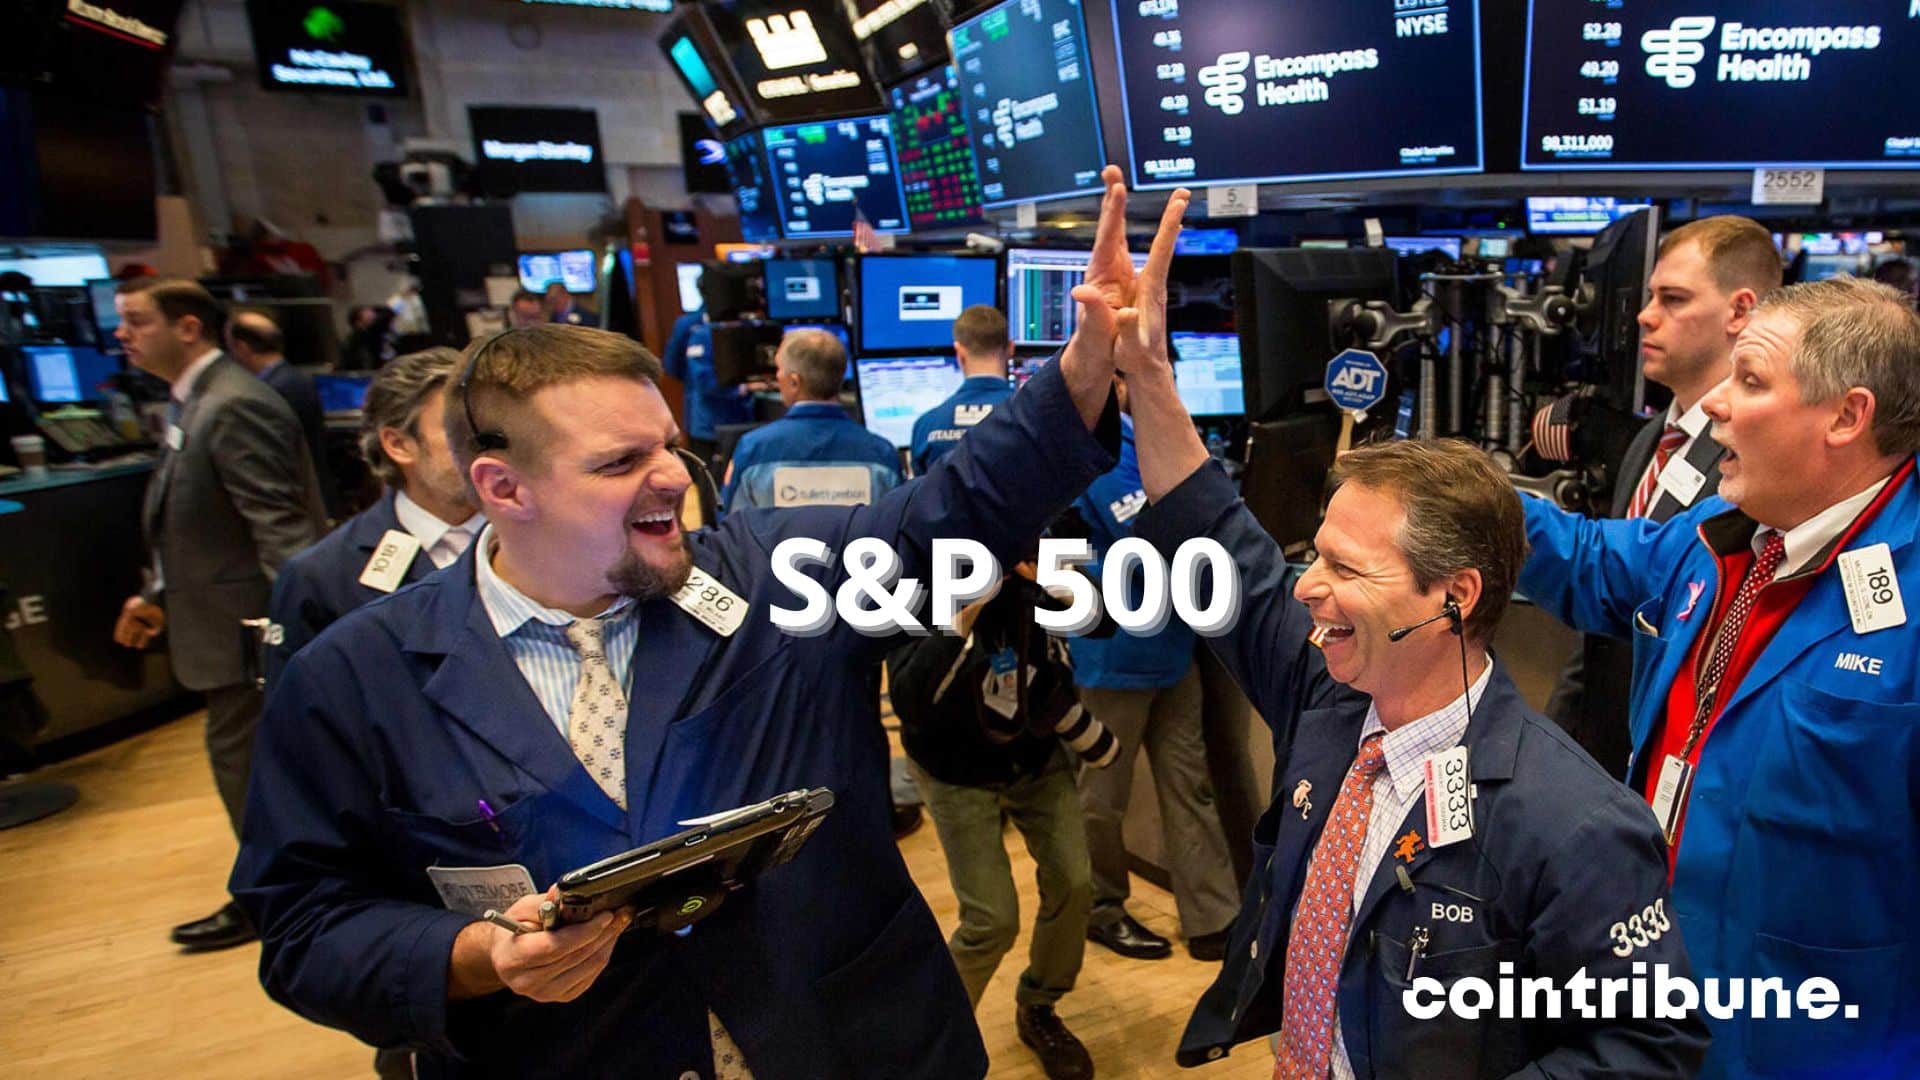 S&P 500 finance bourse